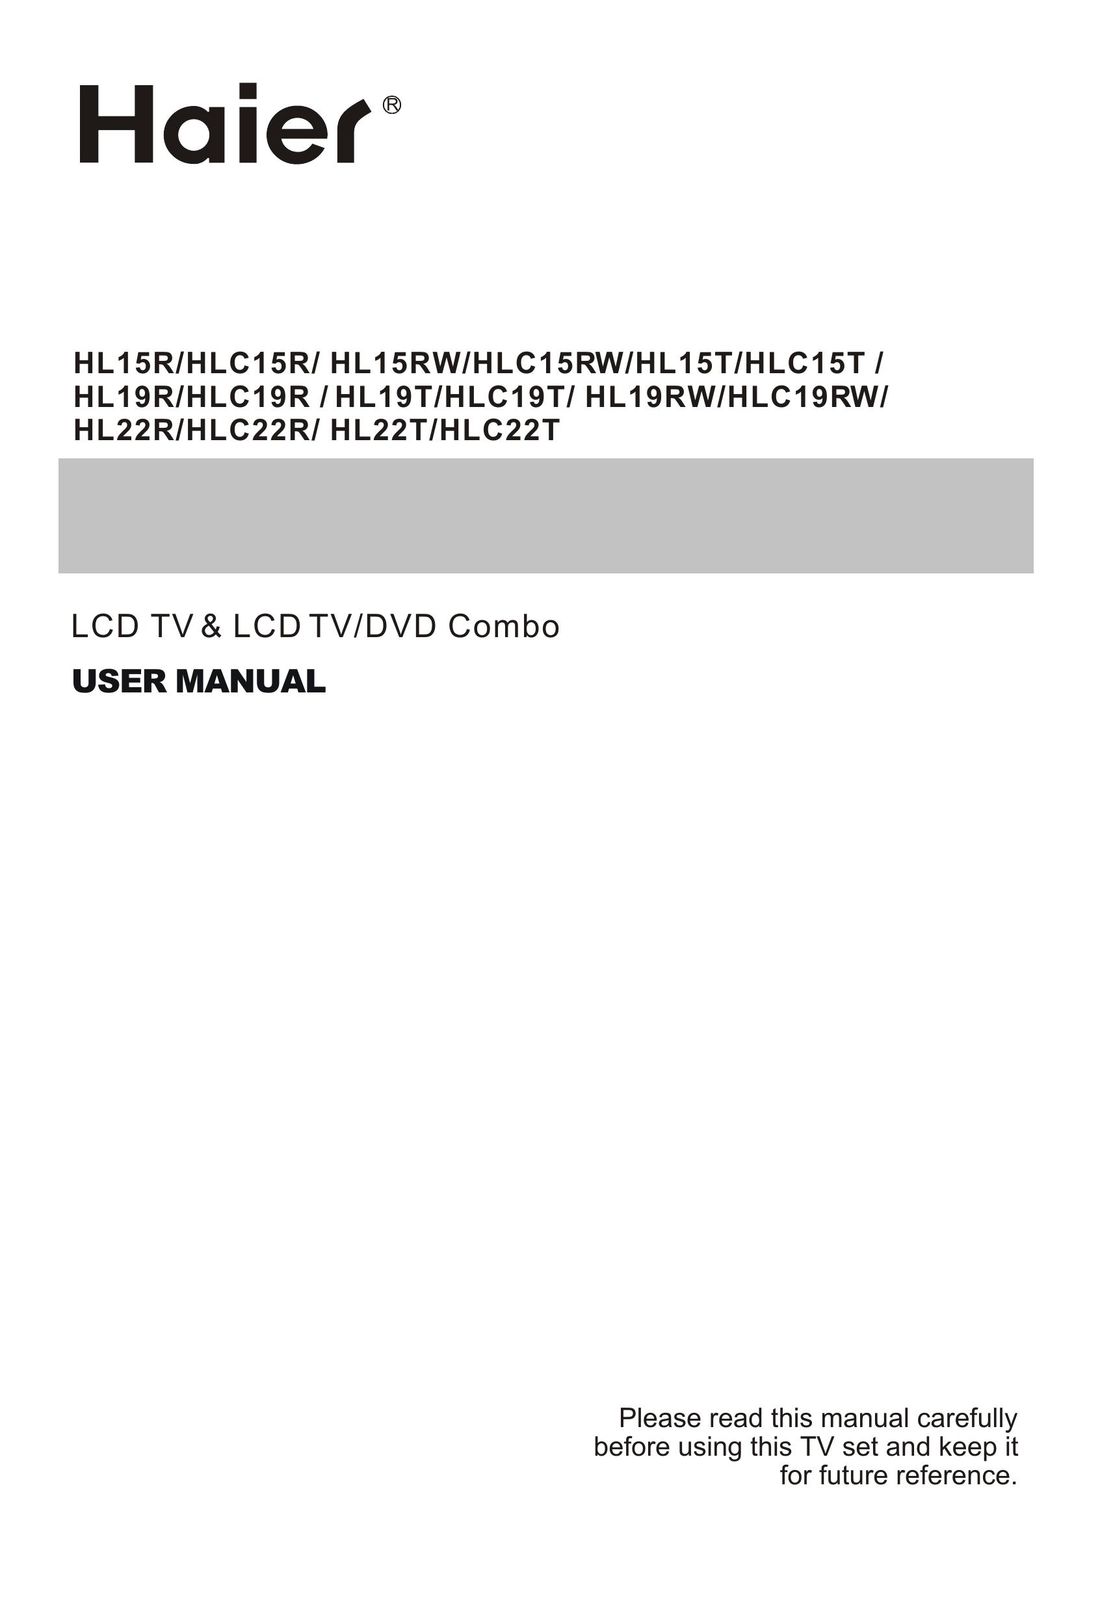 Haier HL19RW TV DVD Combo User Manual